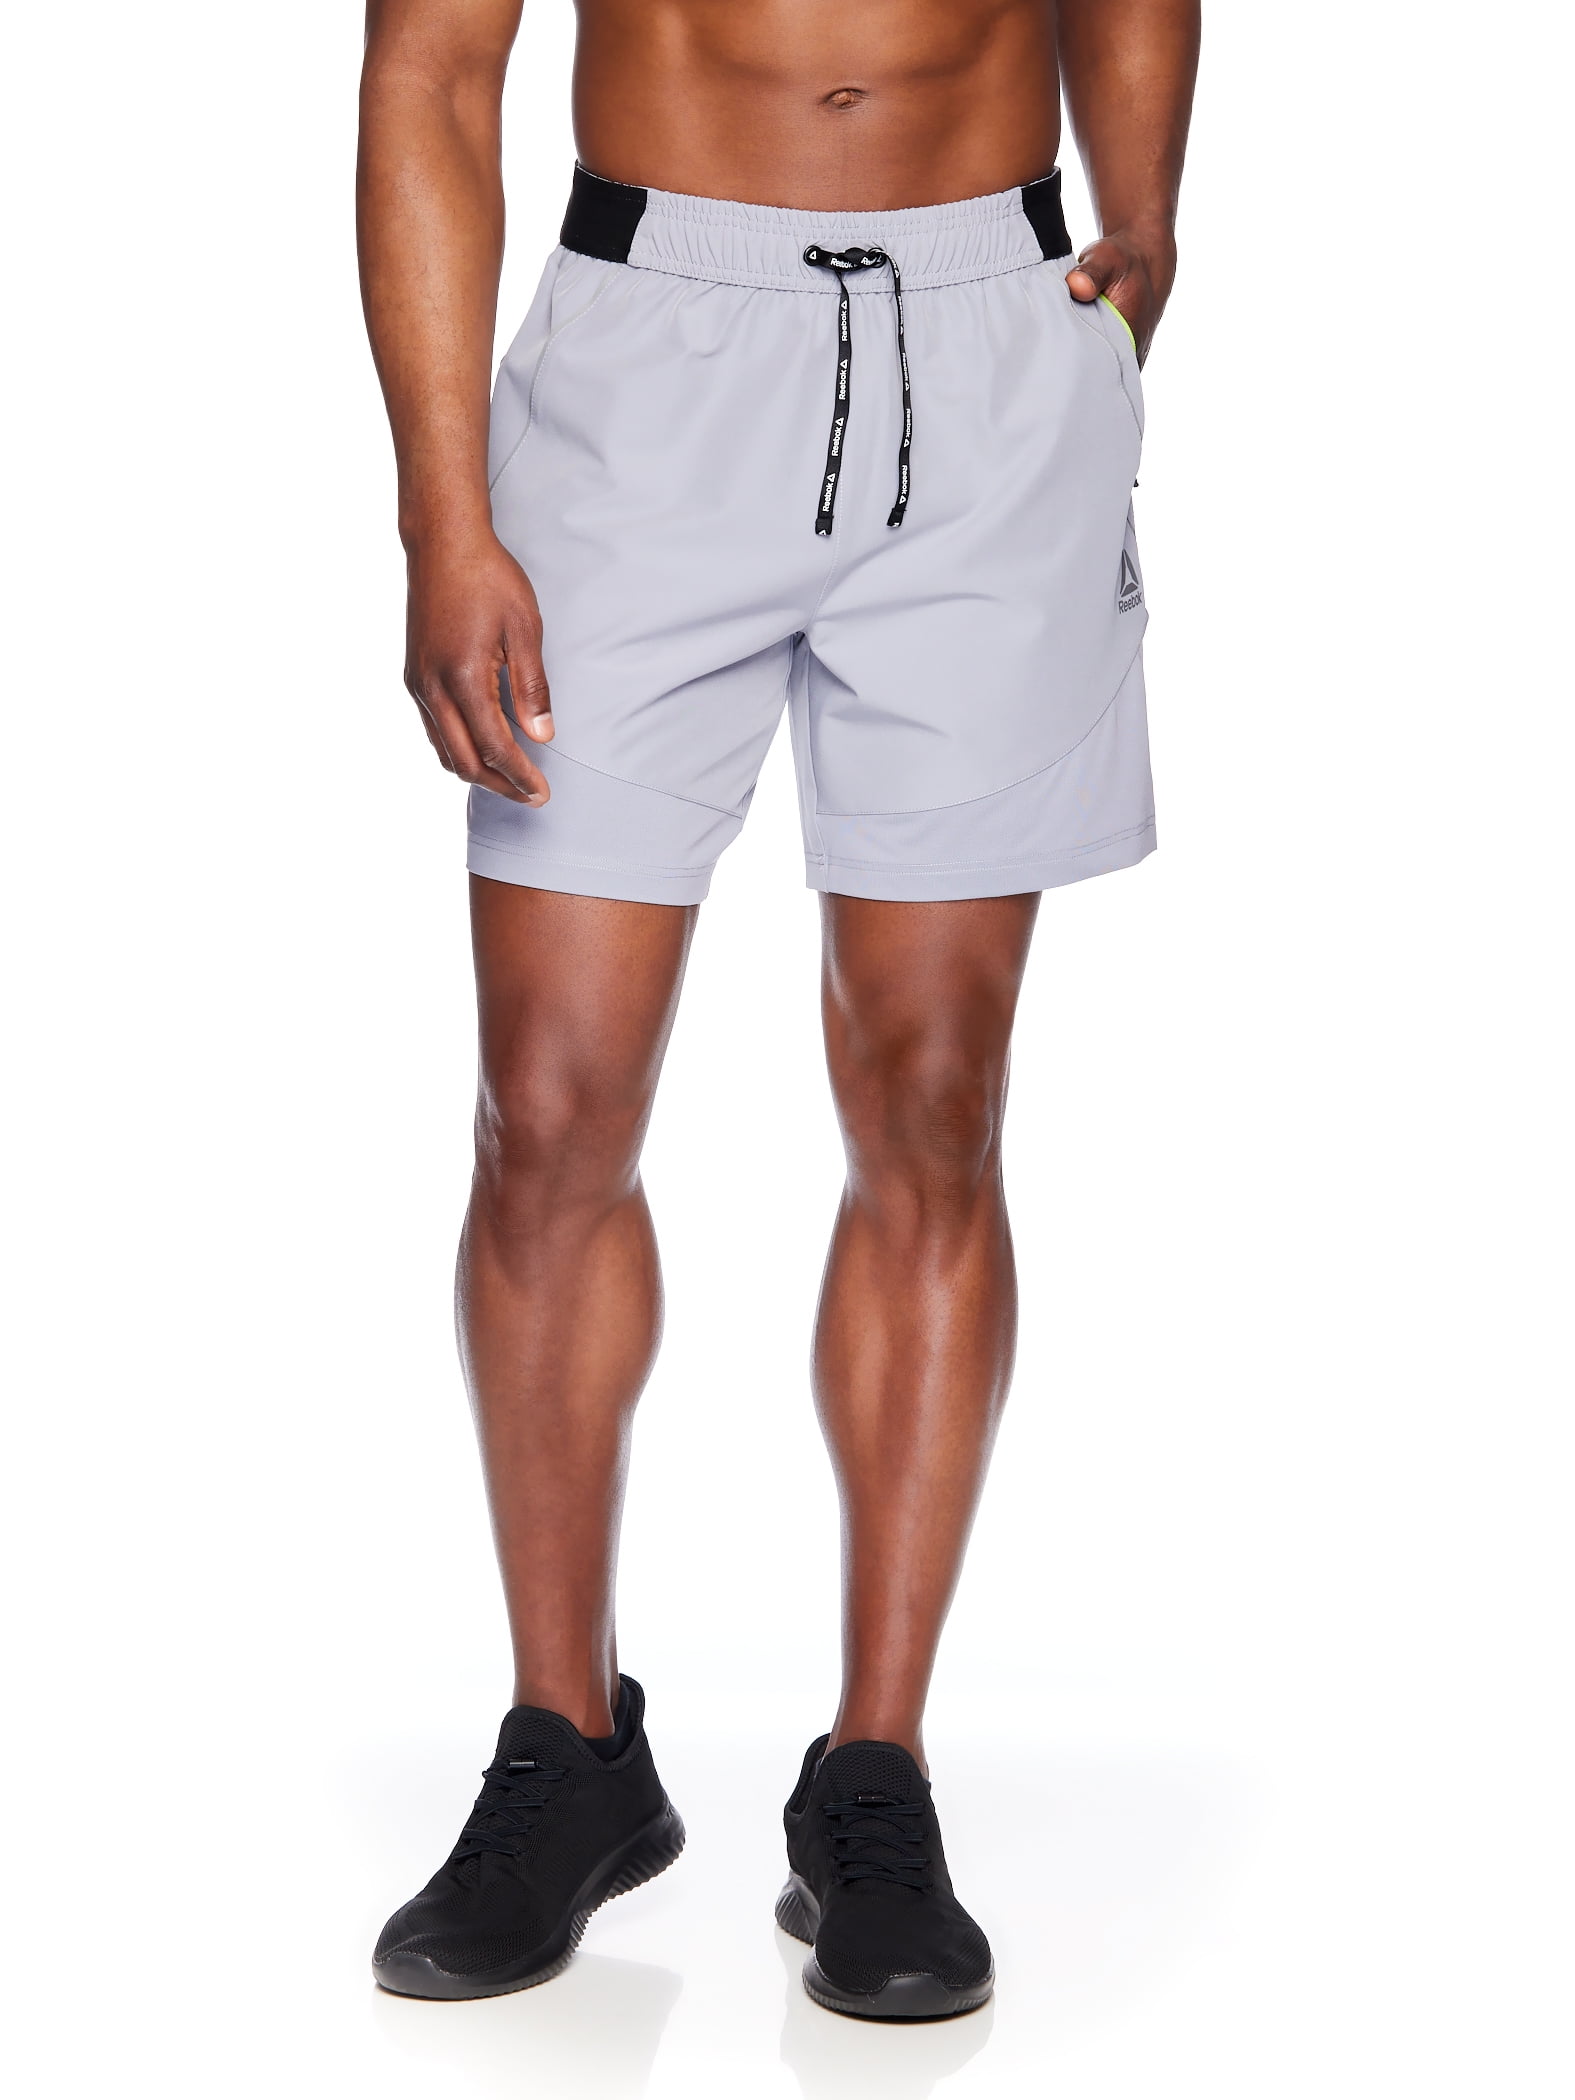 en kop Fremmedgørelse bestyrelse Reebok Men's Movement Training Shorts, 7" Inseam, up to Size 3XL -  Walmart.com